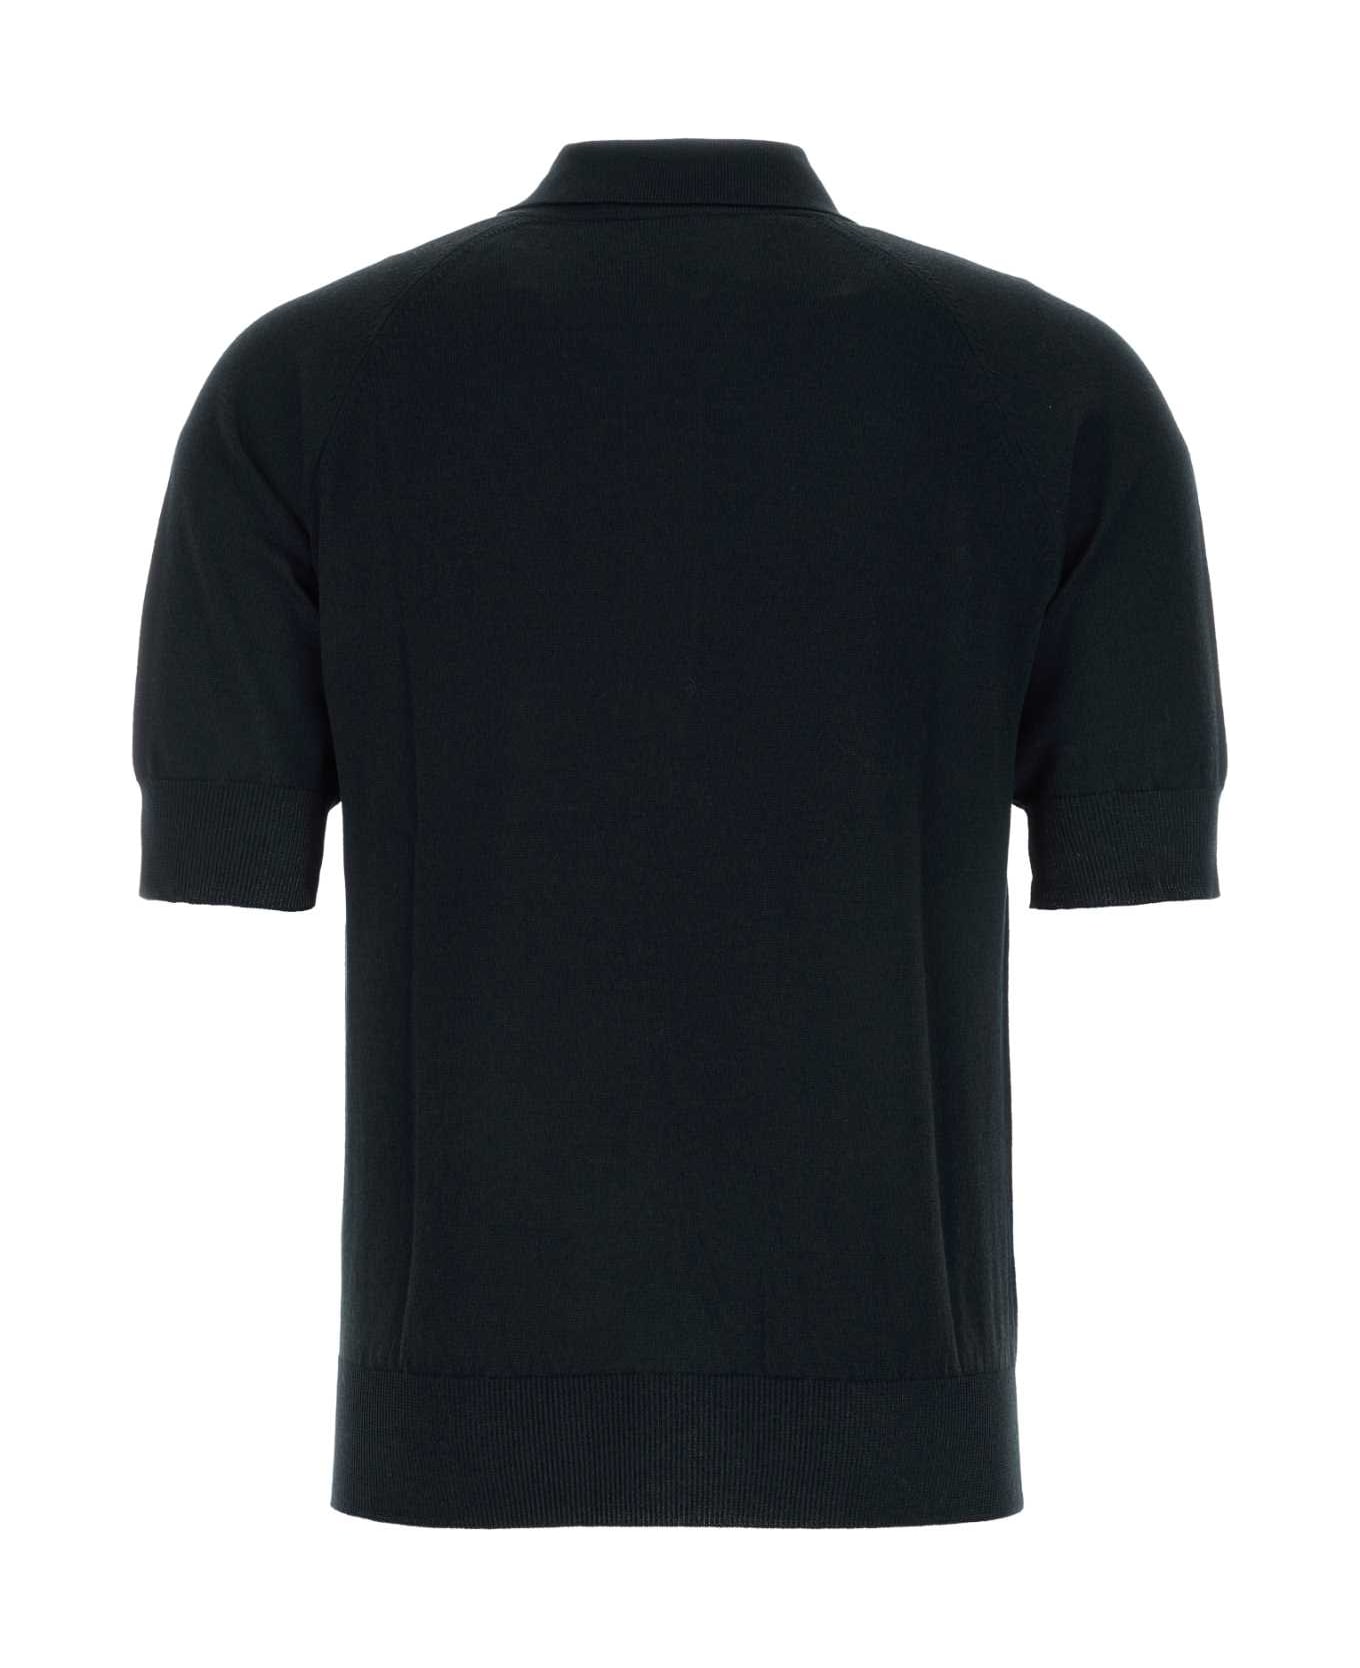 PT Torino Black Cotton Blend Polo Shirt - 0990 ポロシャツ